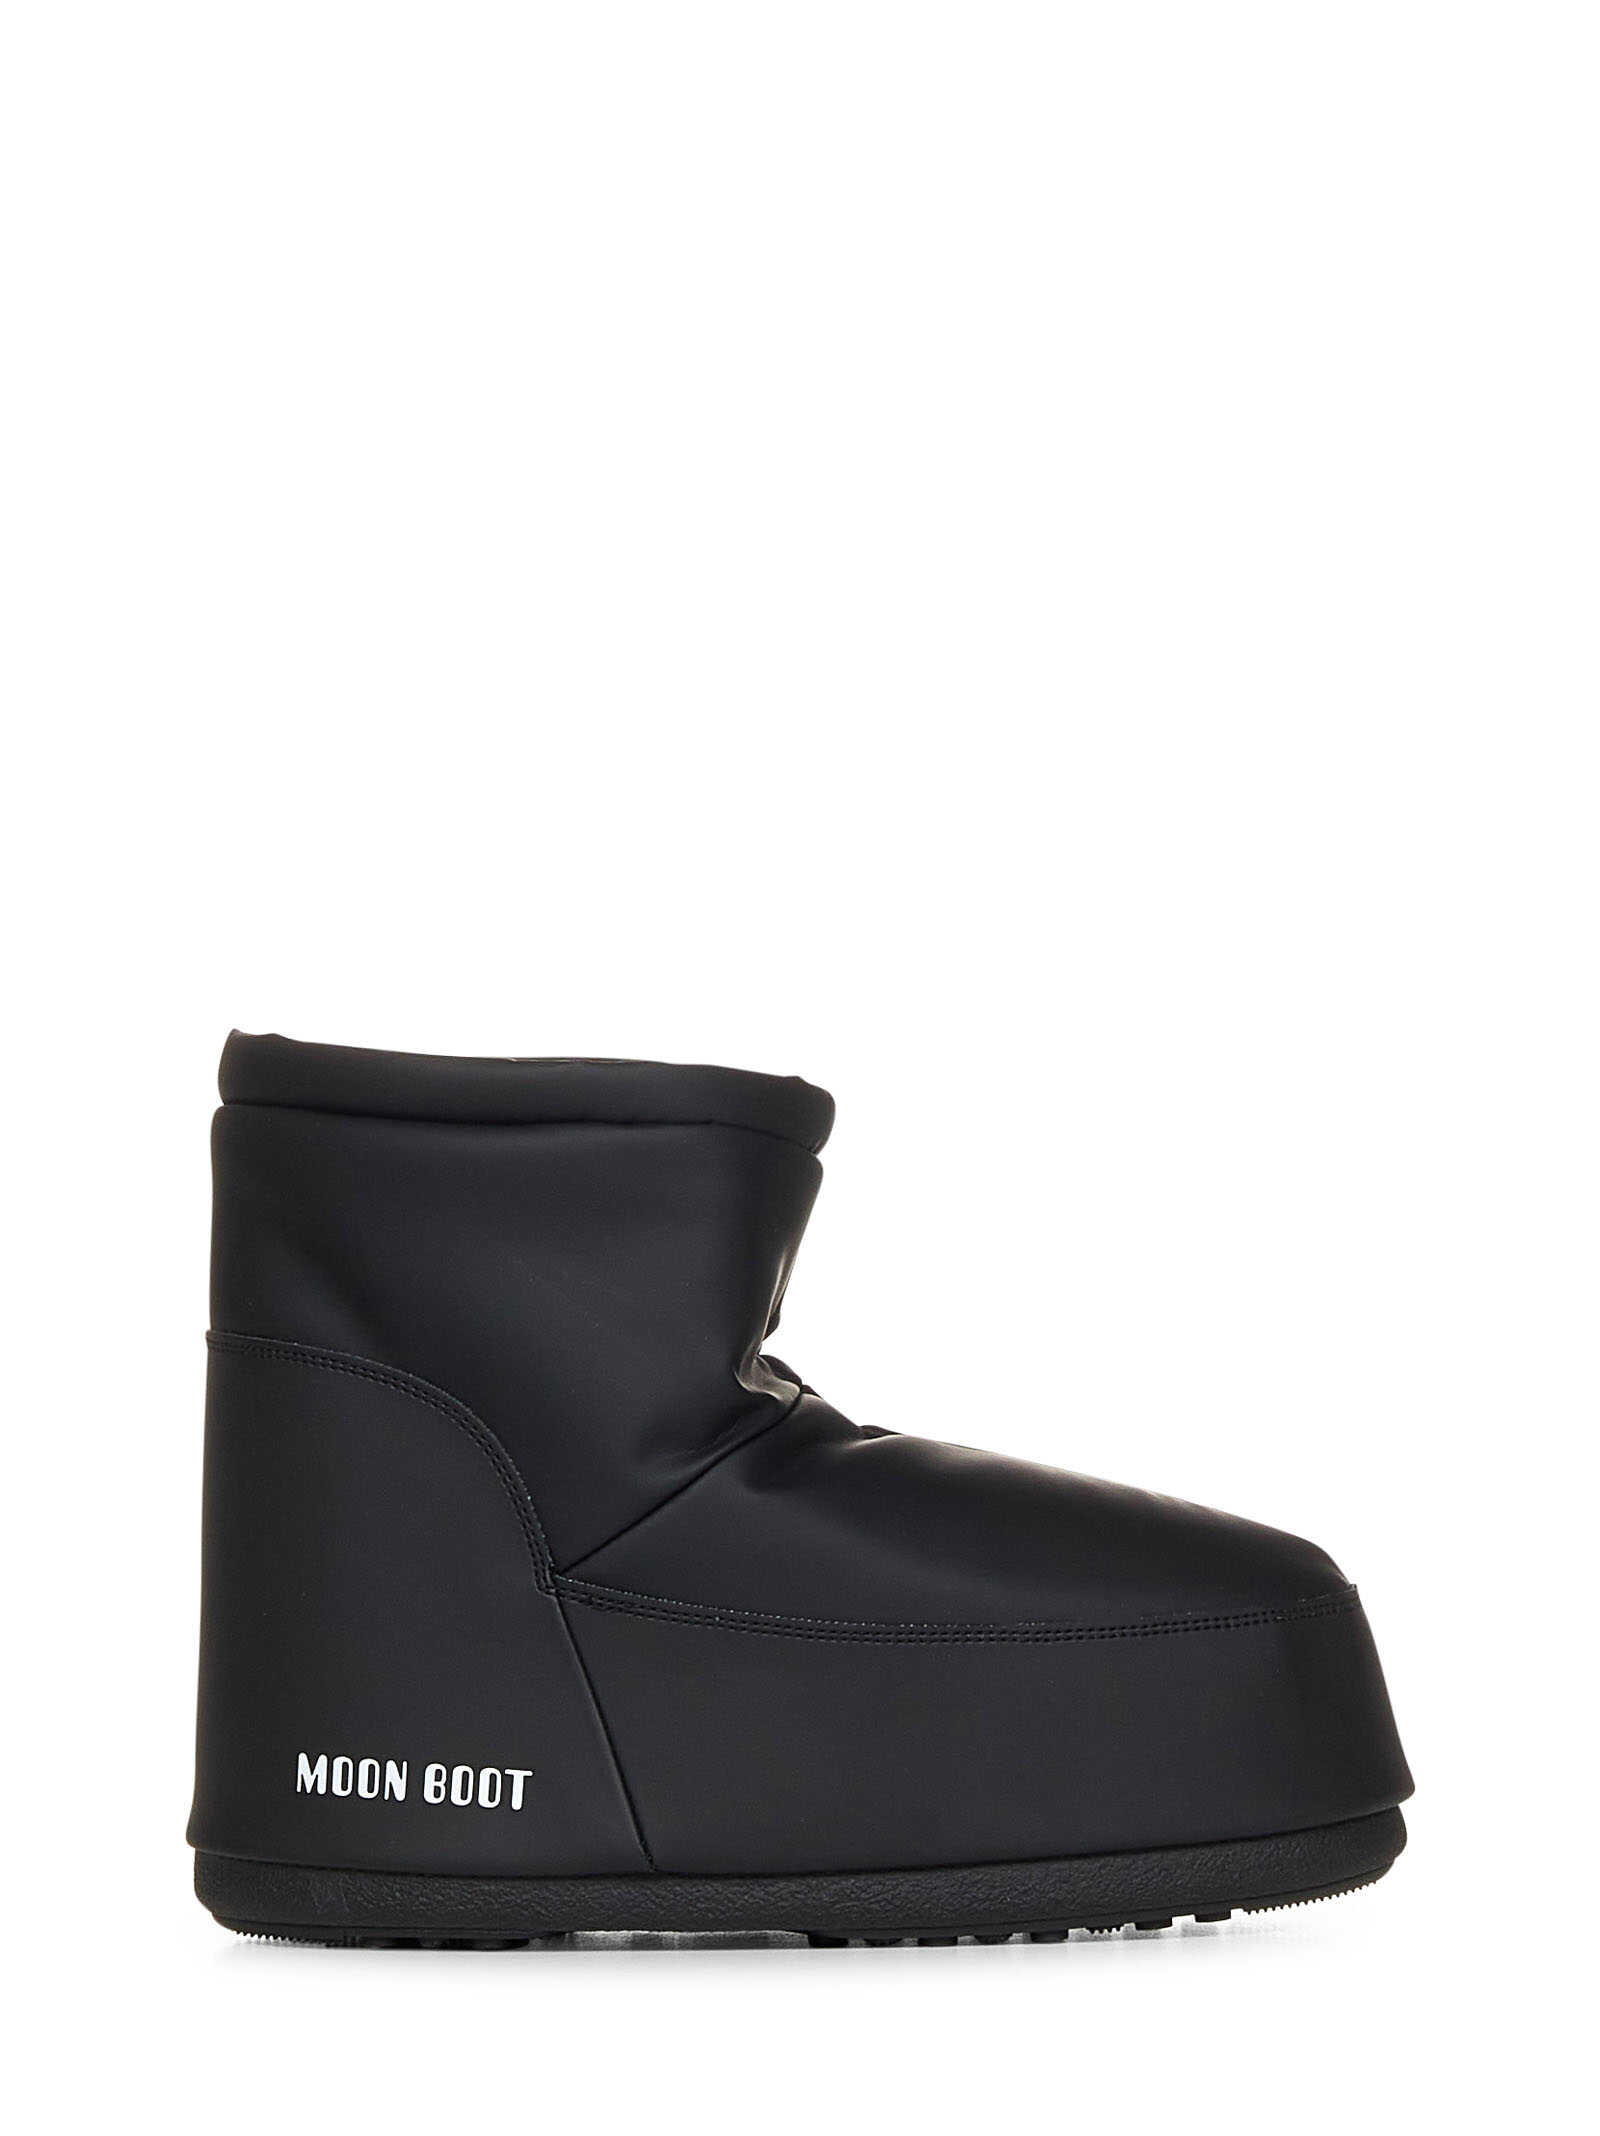 Moon Boot Boots Black Black